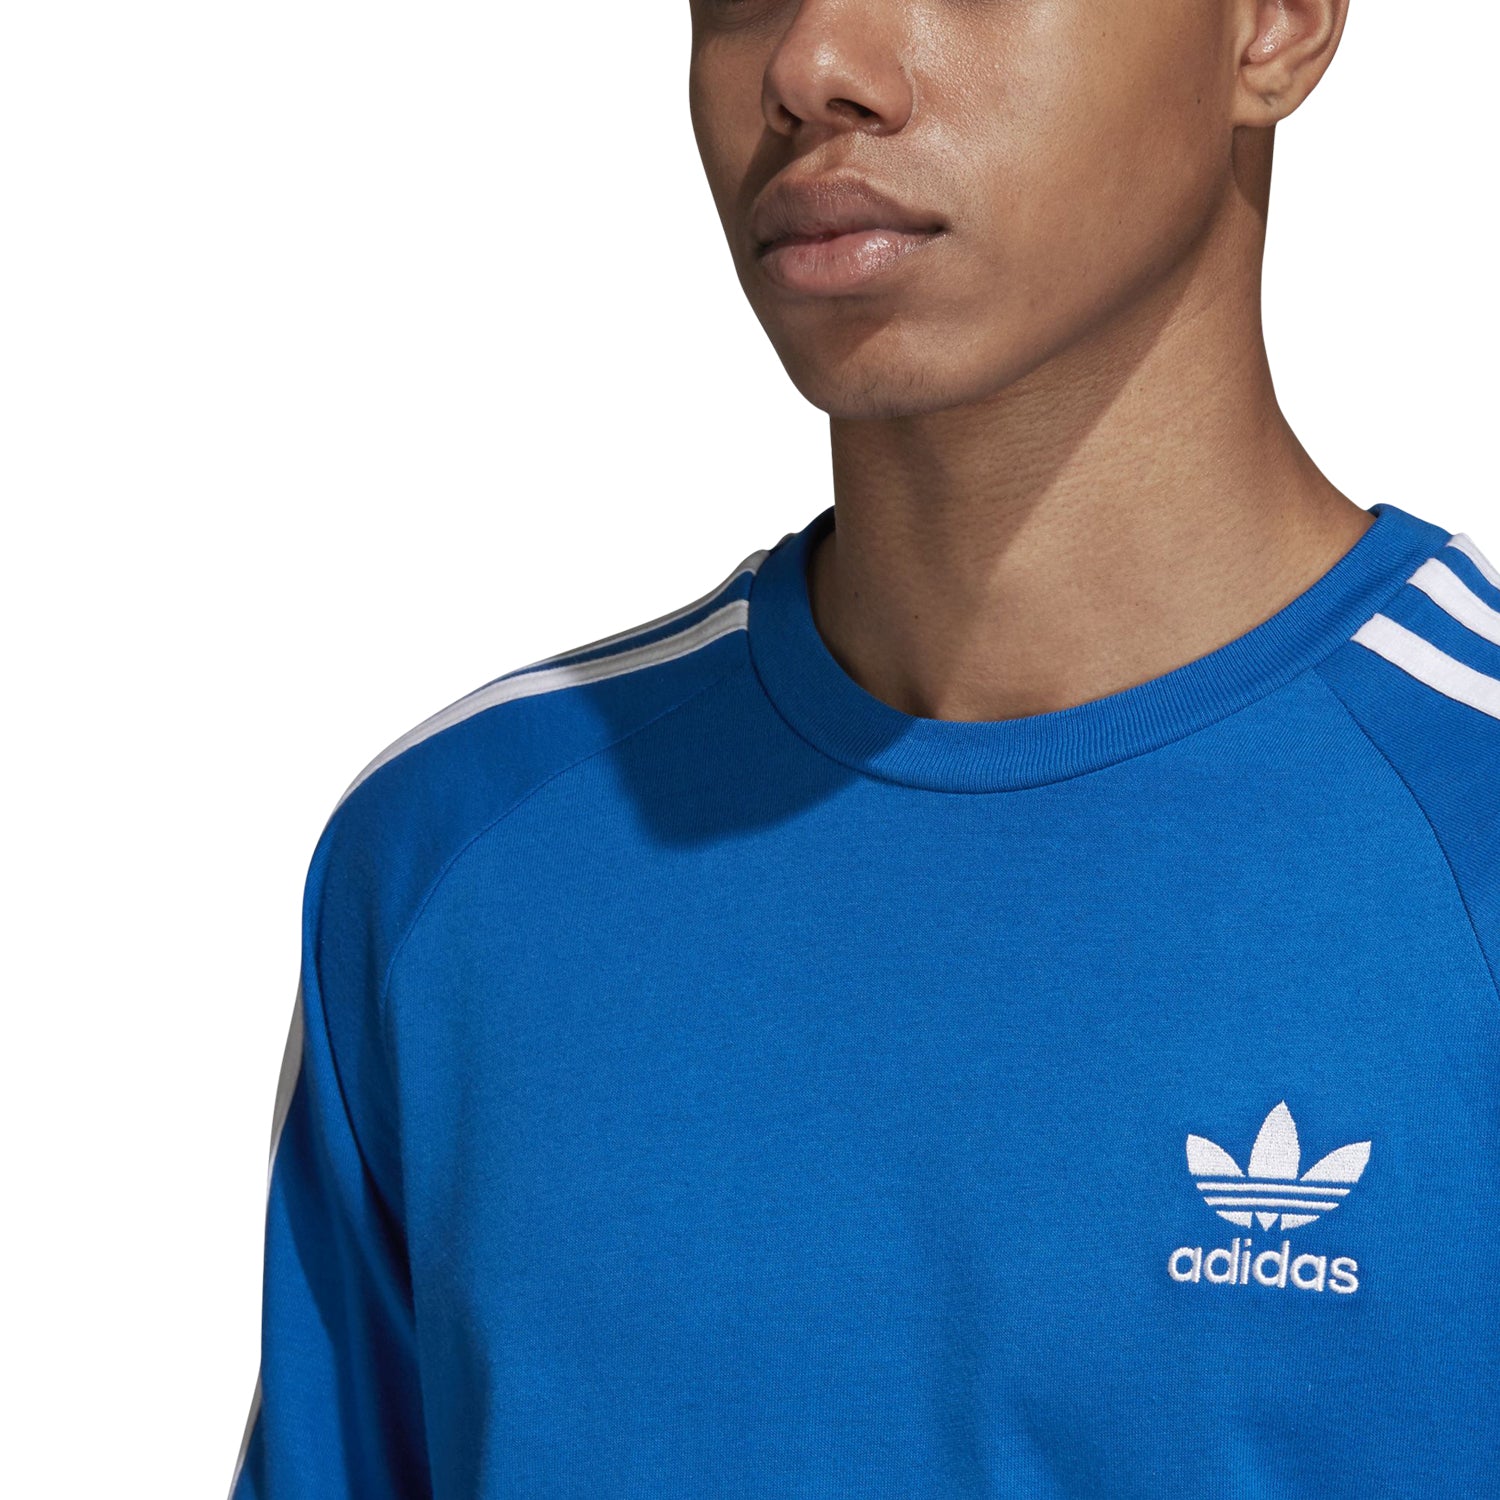 adidas 3 stripe shirt blue